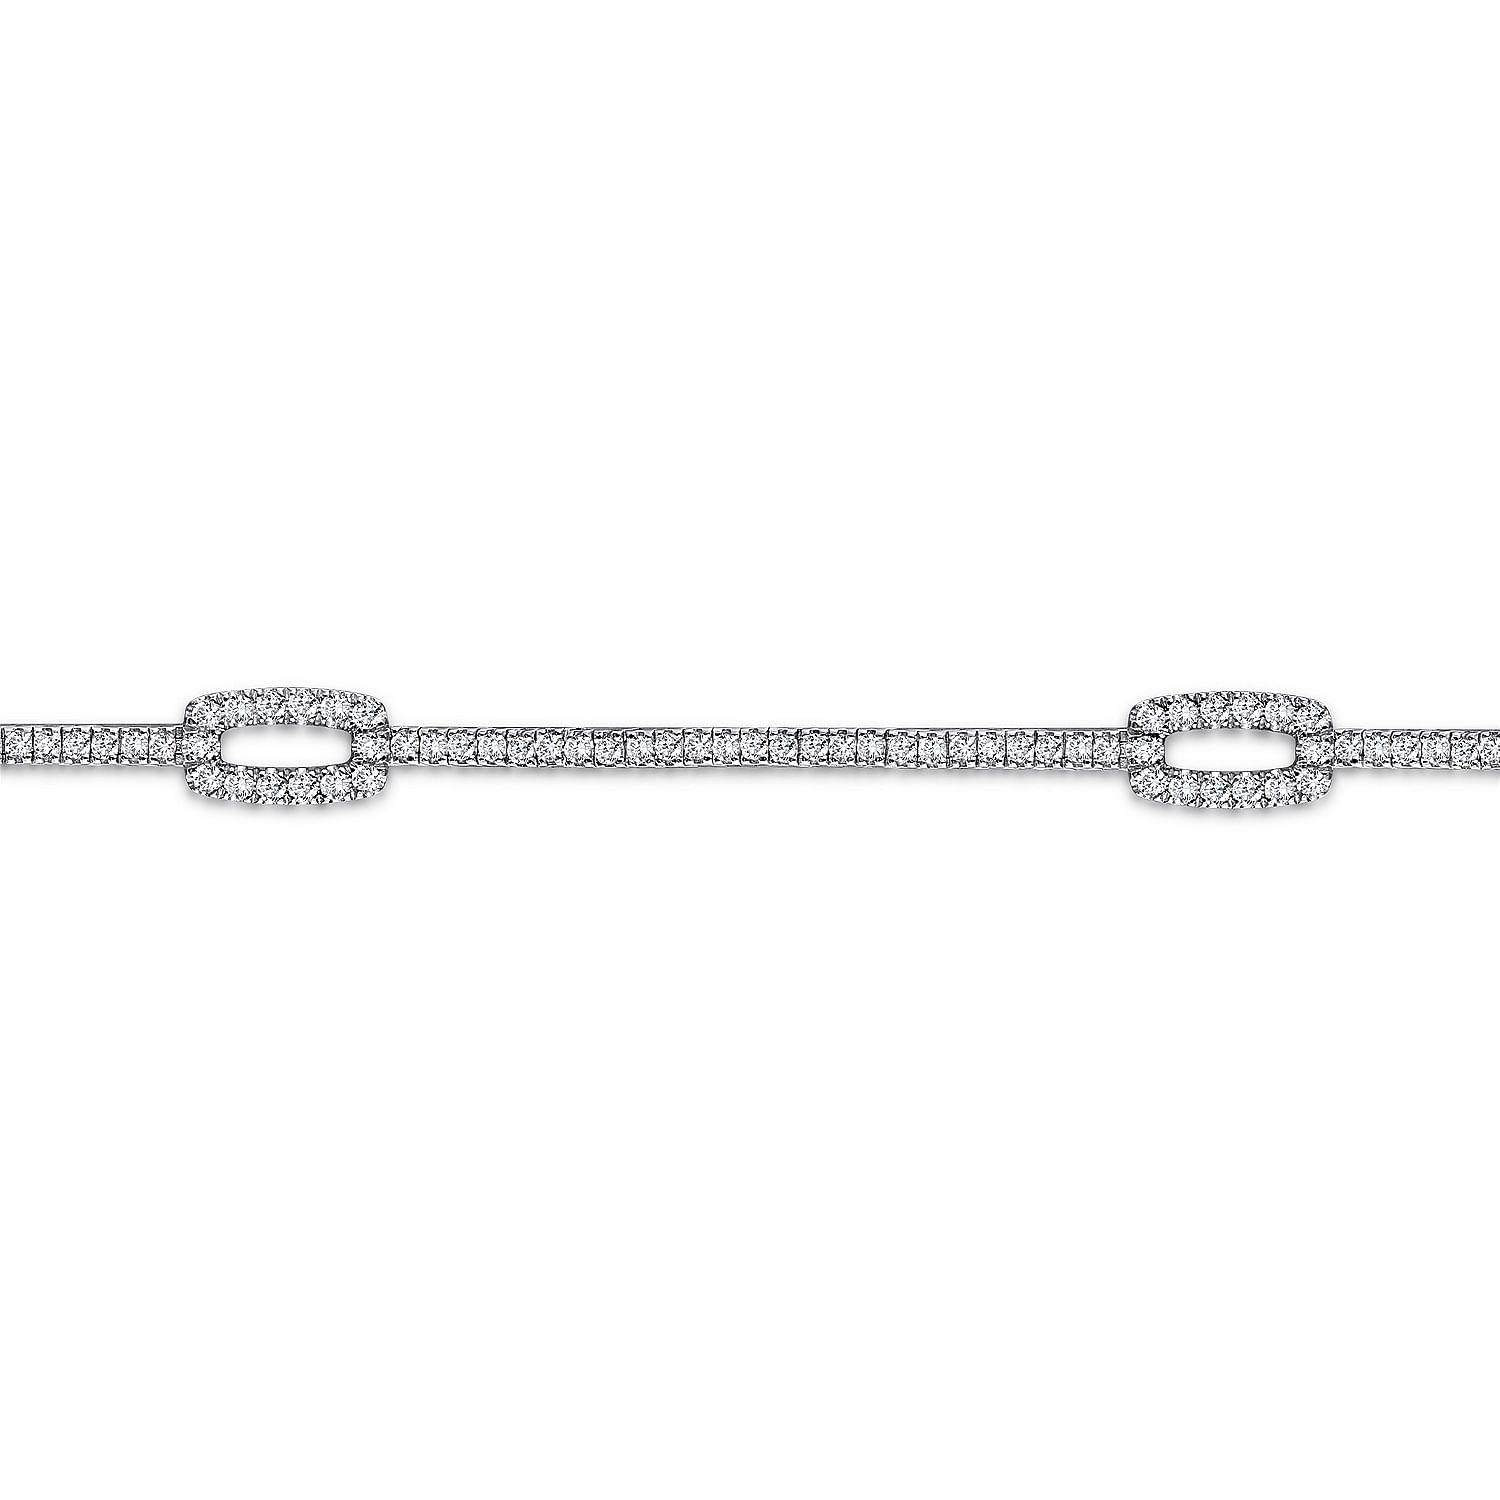 14K White Gold Diamond Tennis Bracelet with Rectangular Link Stations